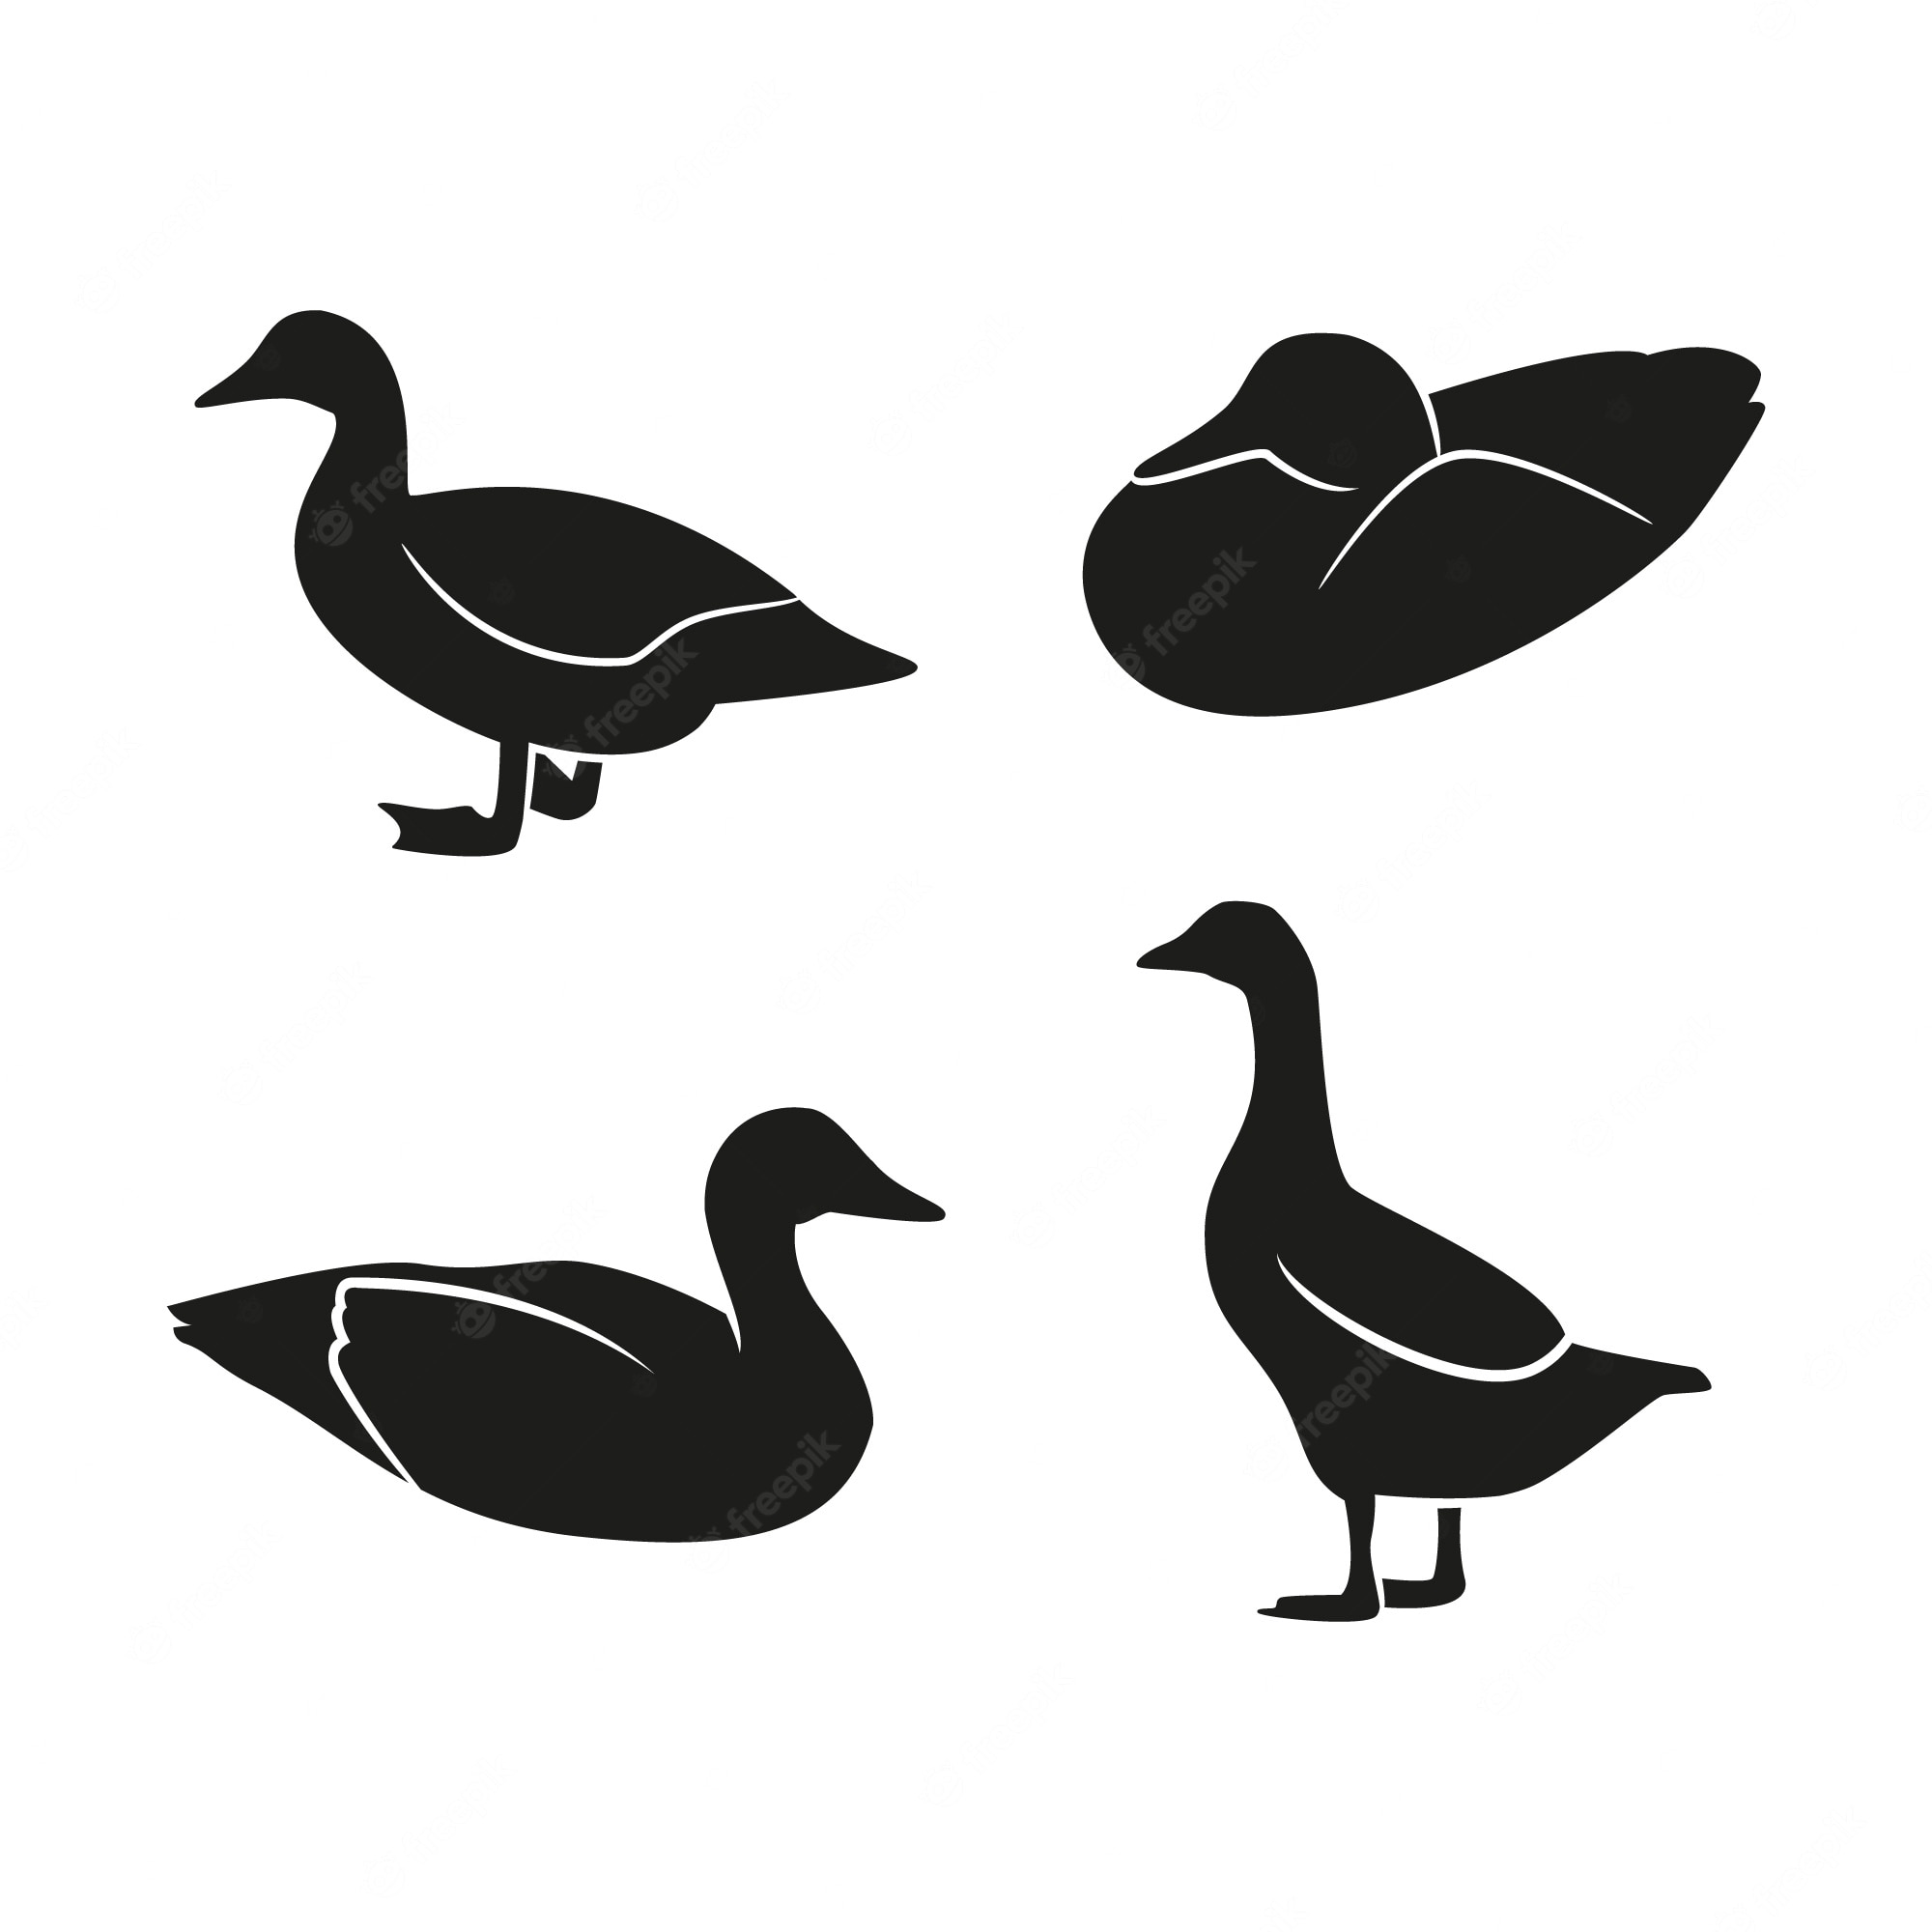 53-914-duck-silhouette-images-stock-photos-vectors-shutterstock